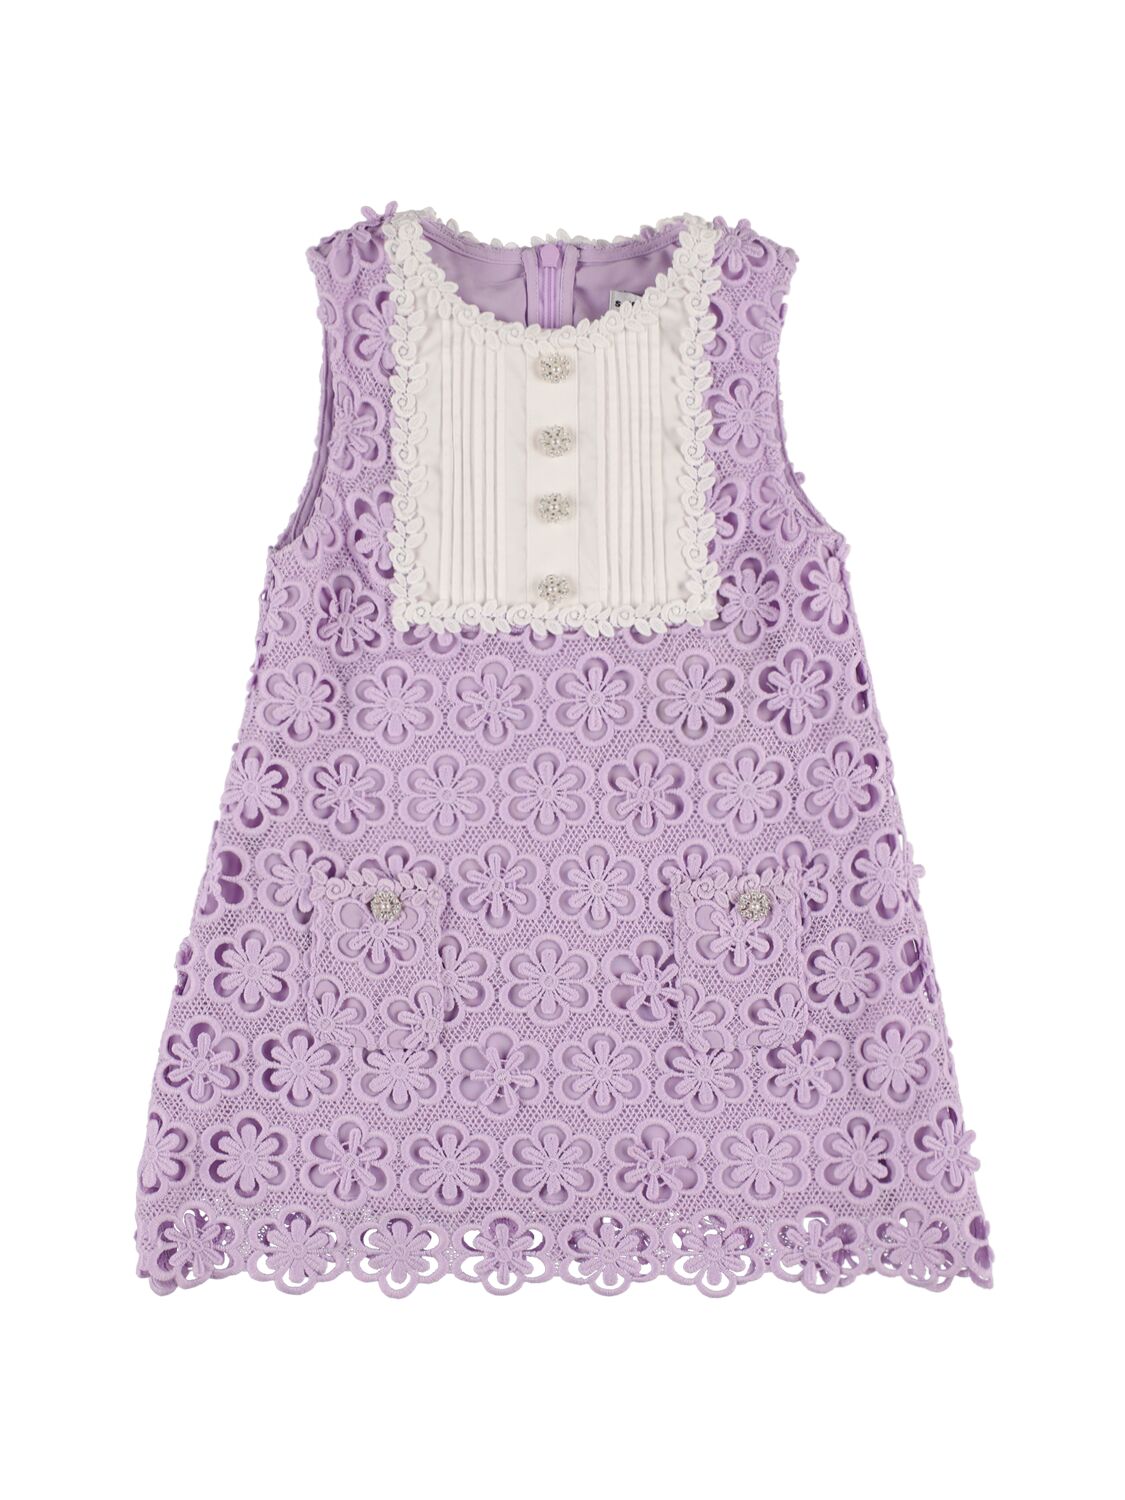 Image of Floral Lace Dress W/ Decorative Buttons